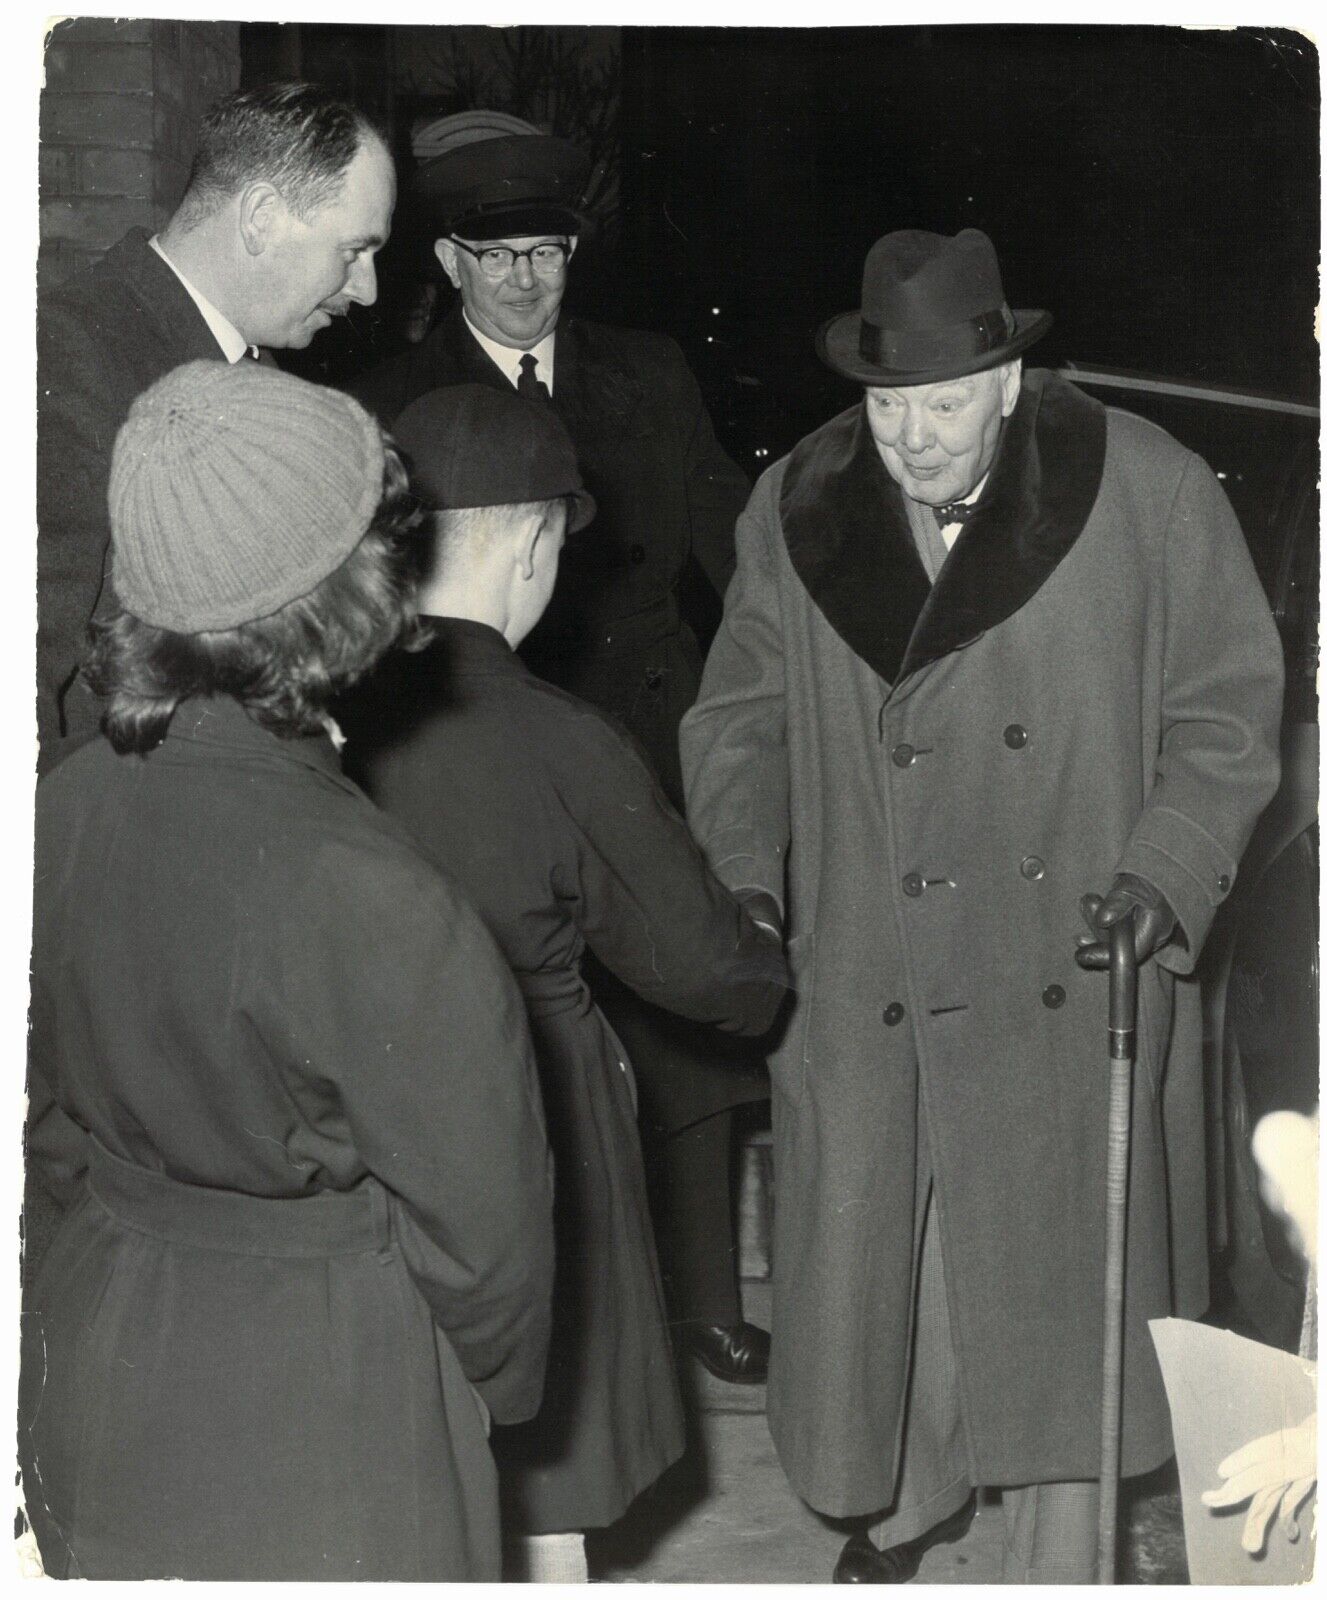 1961 press photo of Winston Churchill meeting the children of his bodyguard